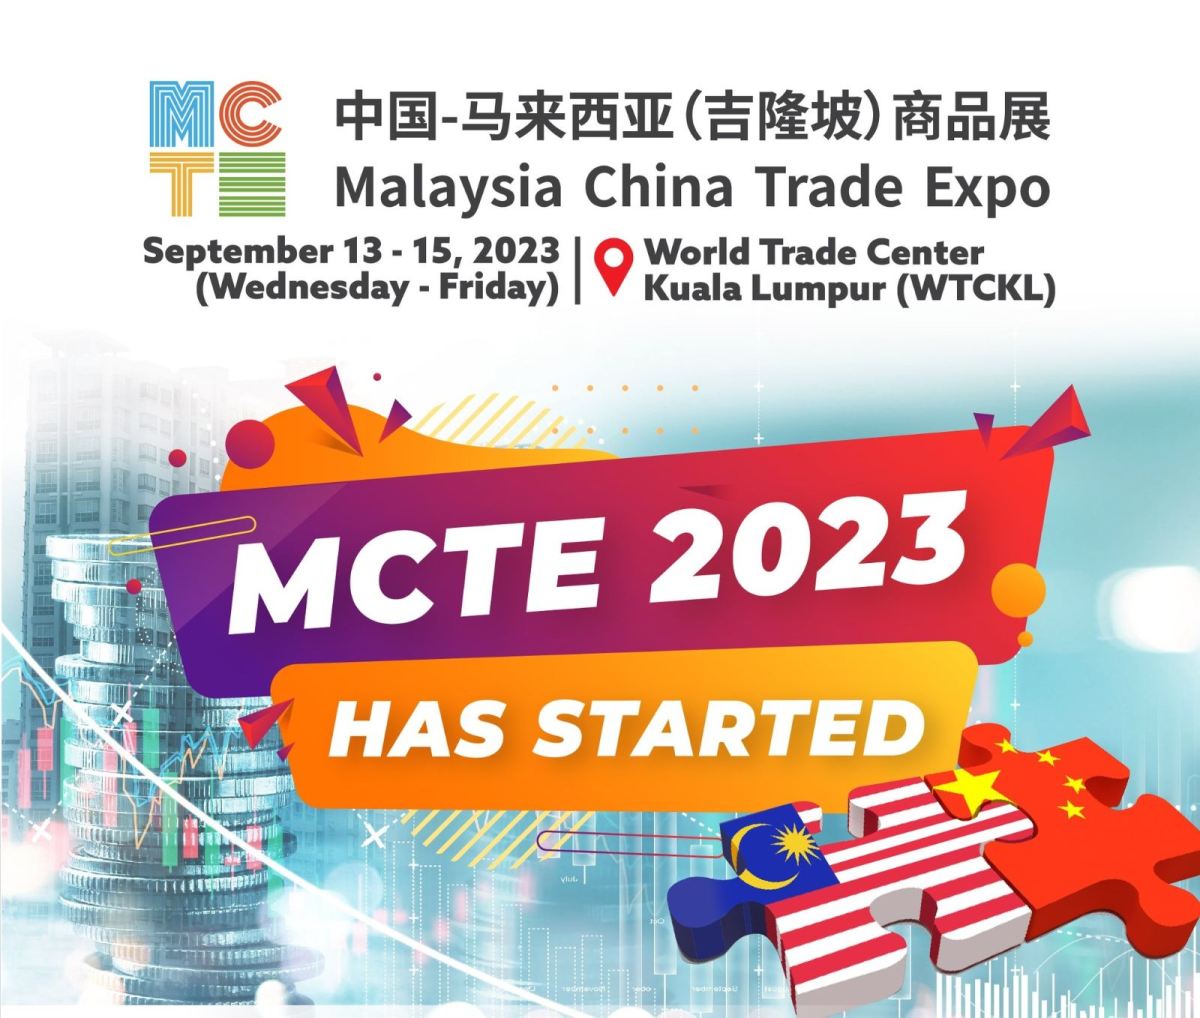 Malaysia China Trade Expo - MCTE